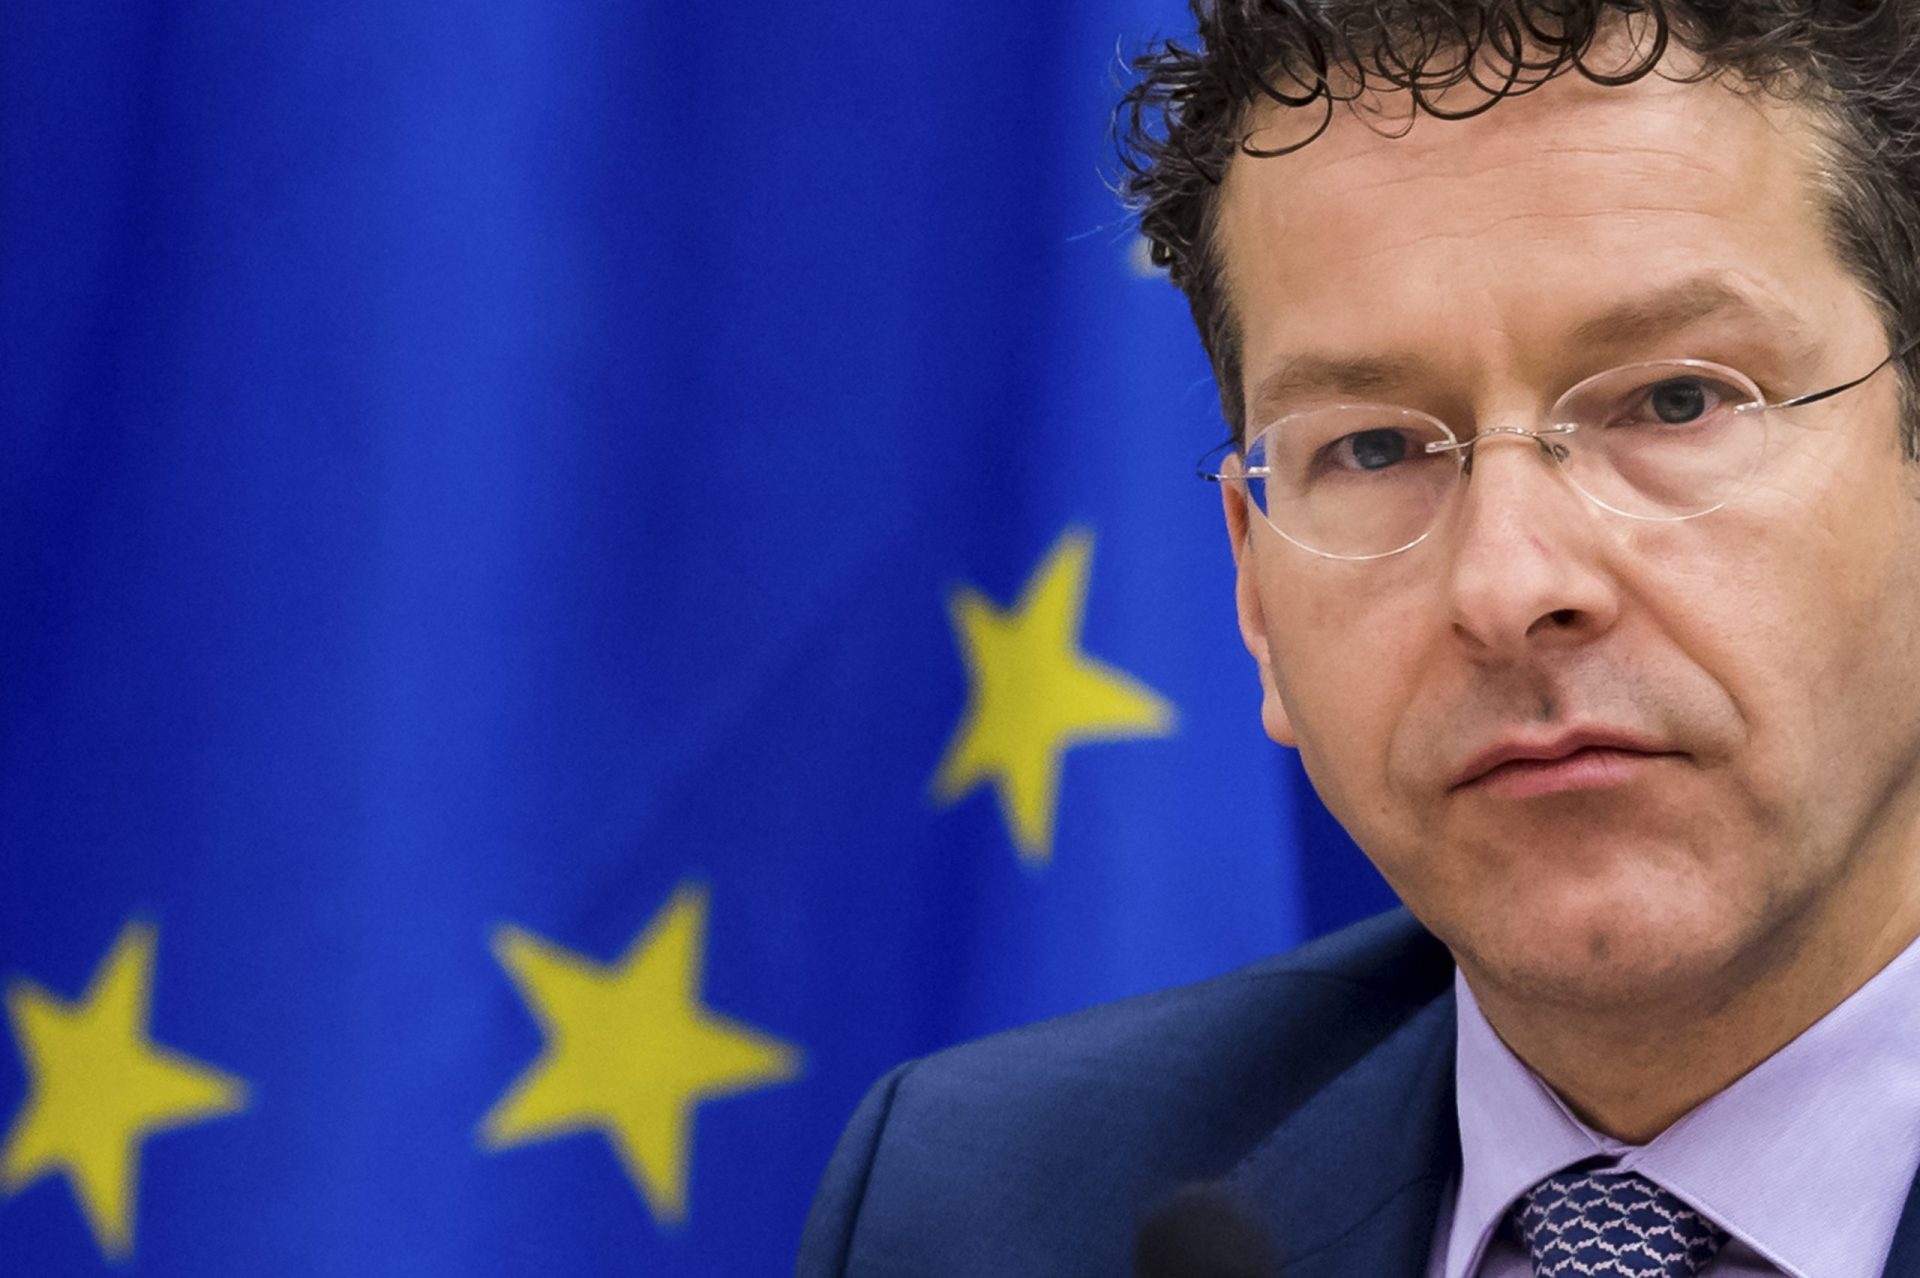 Eurogrupo vai prosseguir sem Grécia e discutir ‘consequências’, diz Dijsselbloem